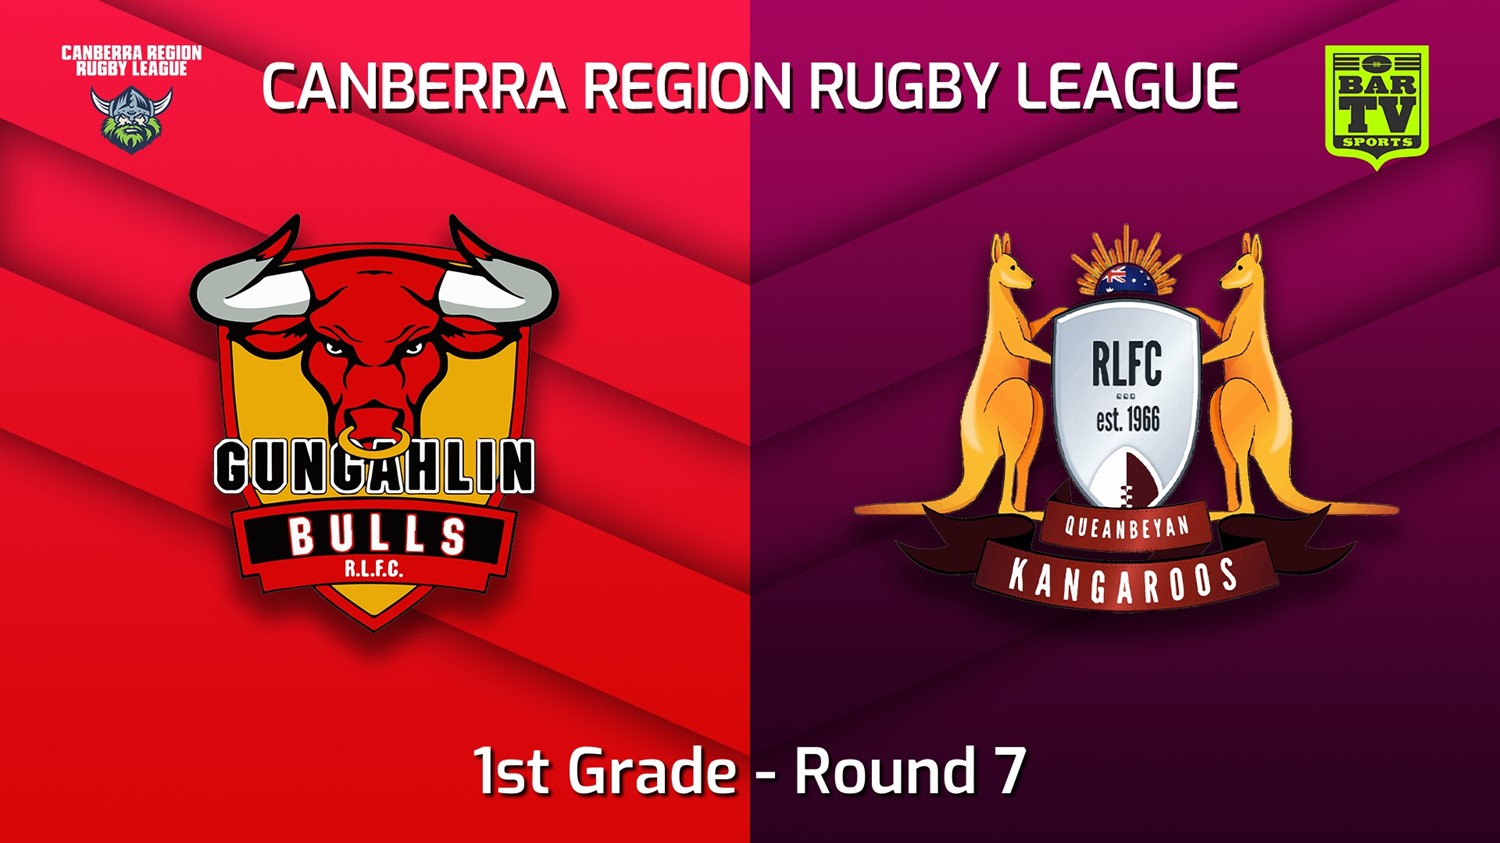 220528-Canberra Round 7 - 1st Grade - Gungahlin Bulls v Queanbeyan Kangaroos Minigame Slate Image